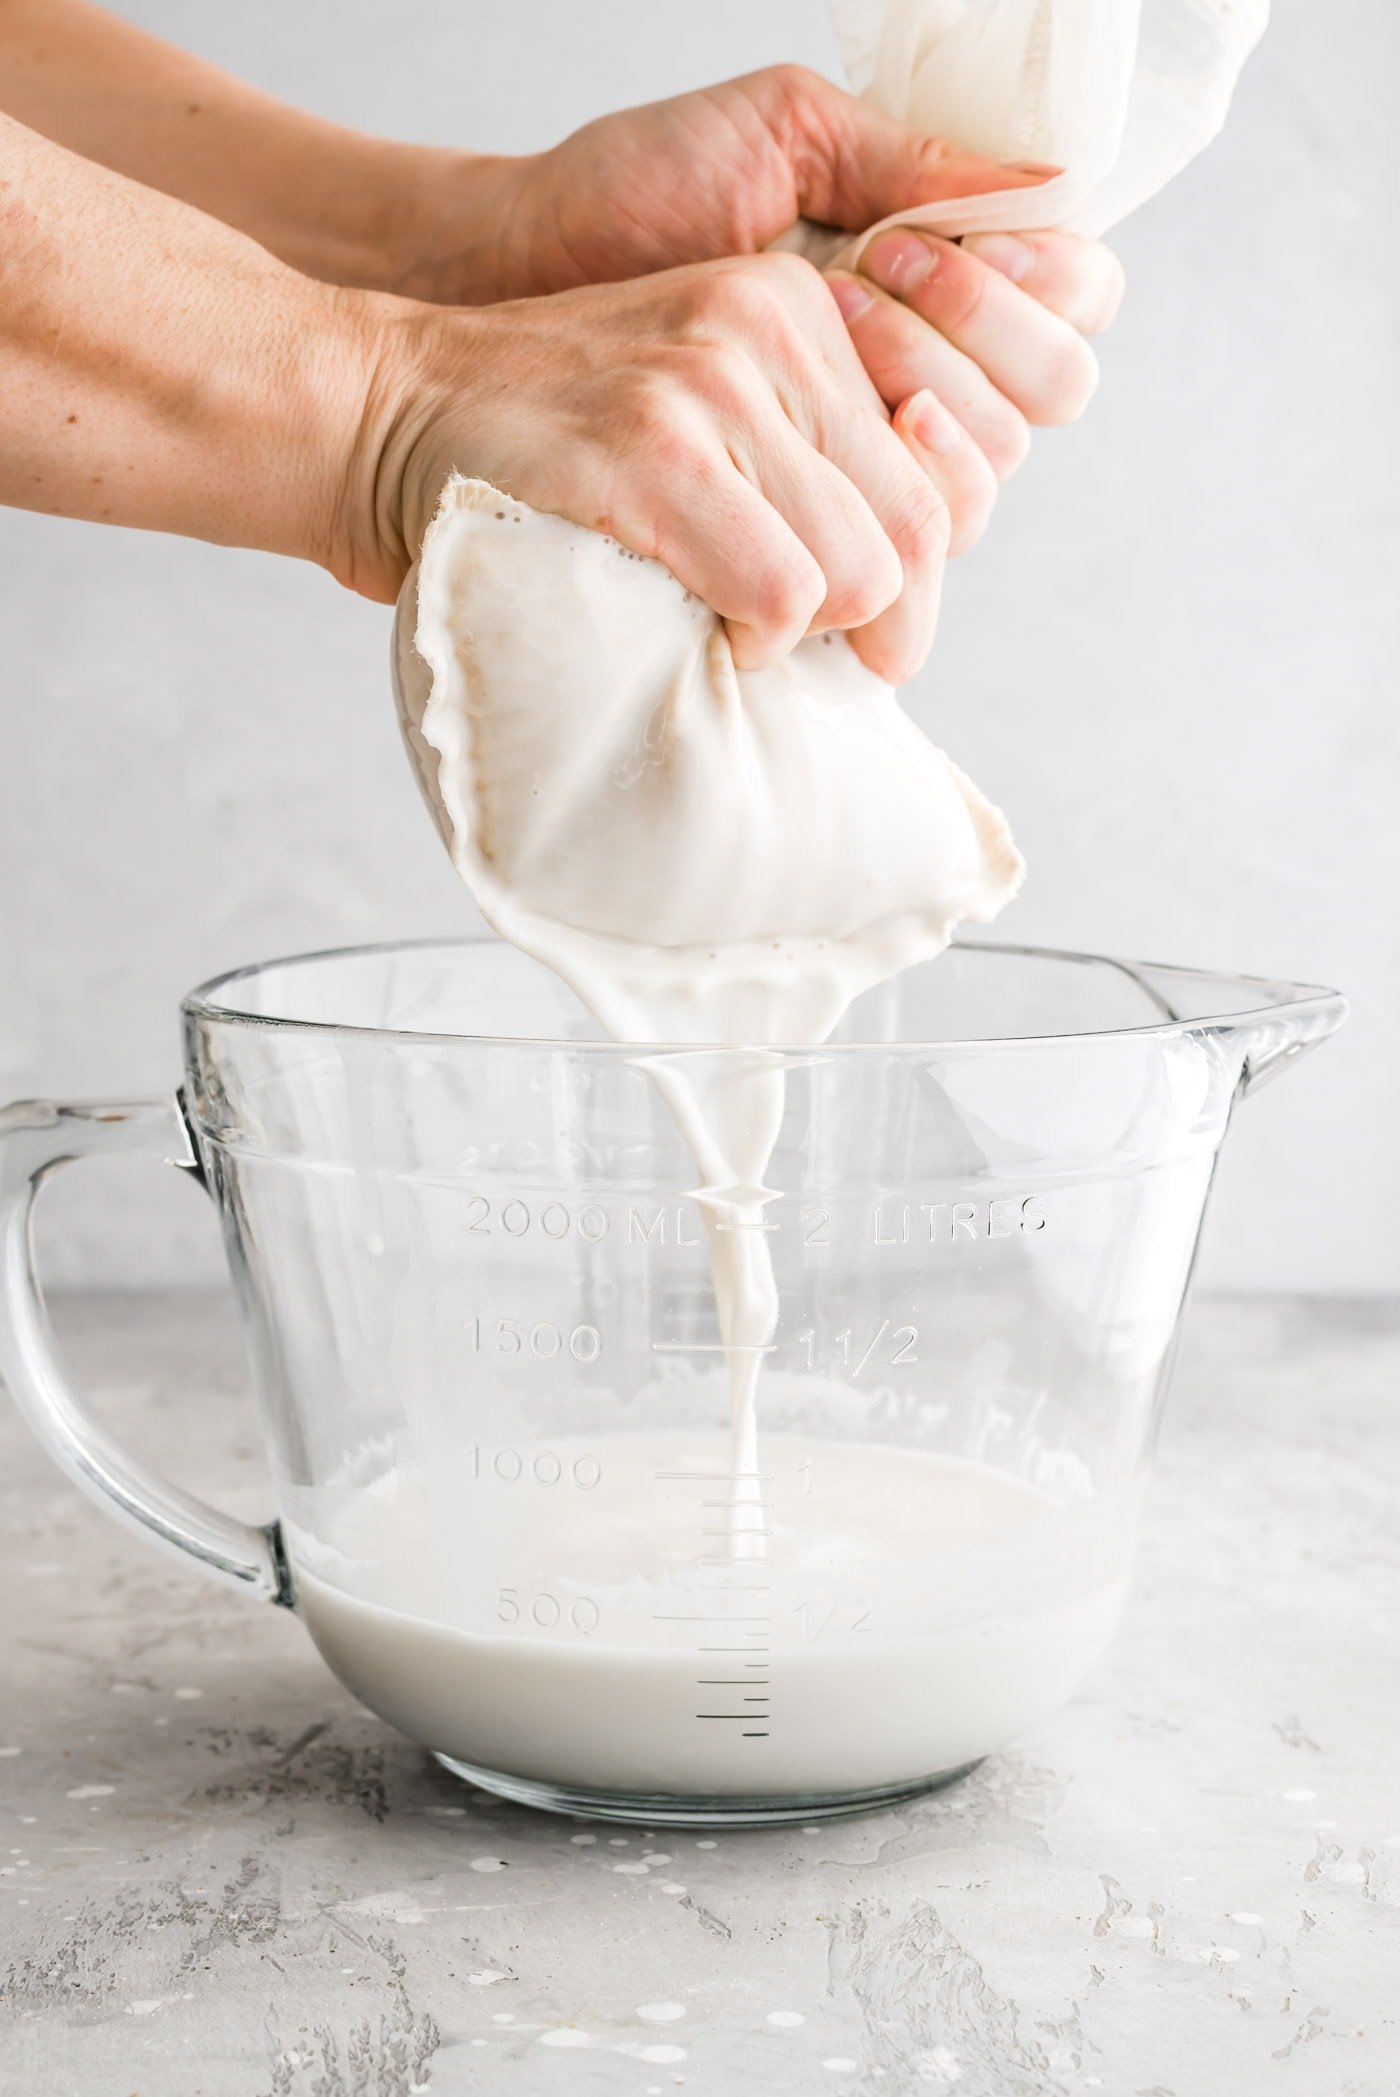 https://runningonrealfood.com/wp-content/uploads/2019/03/how-to-make-oat-milk-easy-homemade-recipe-running-on-real-food-8.jpg